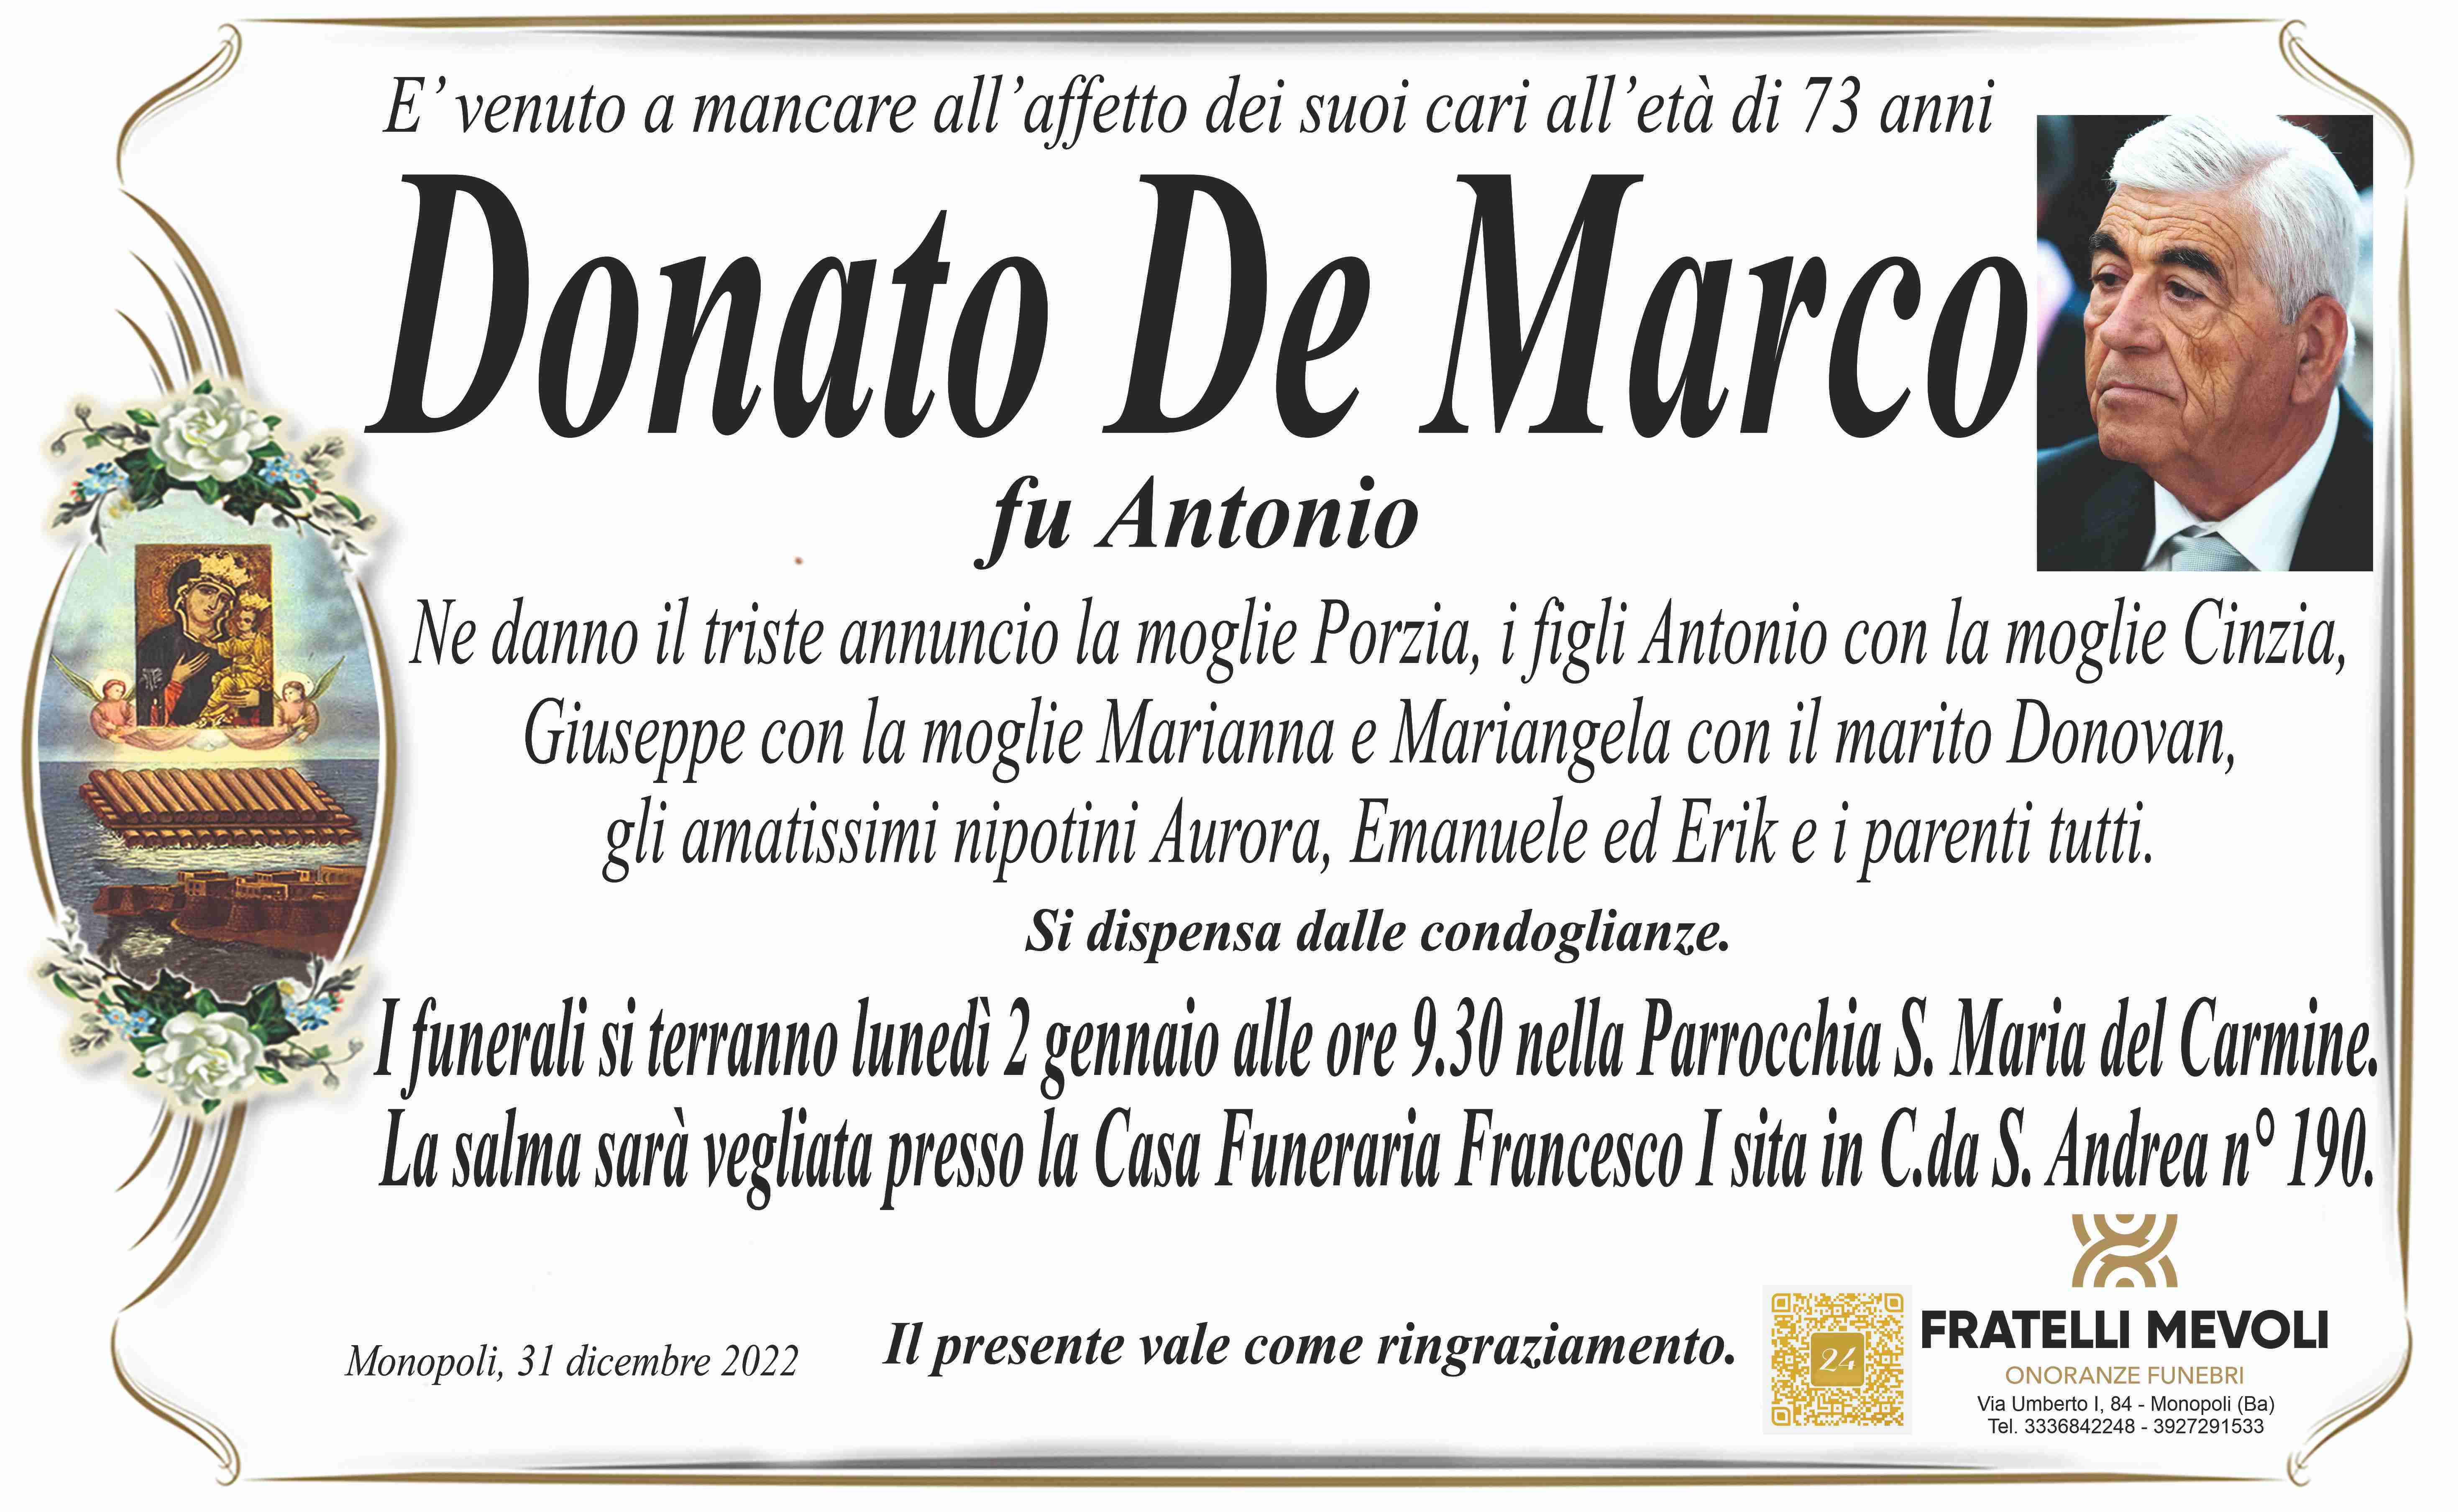 Donato De Marco